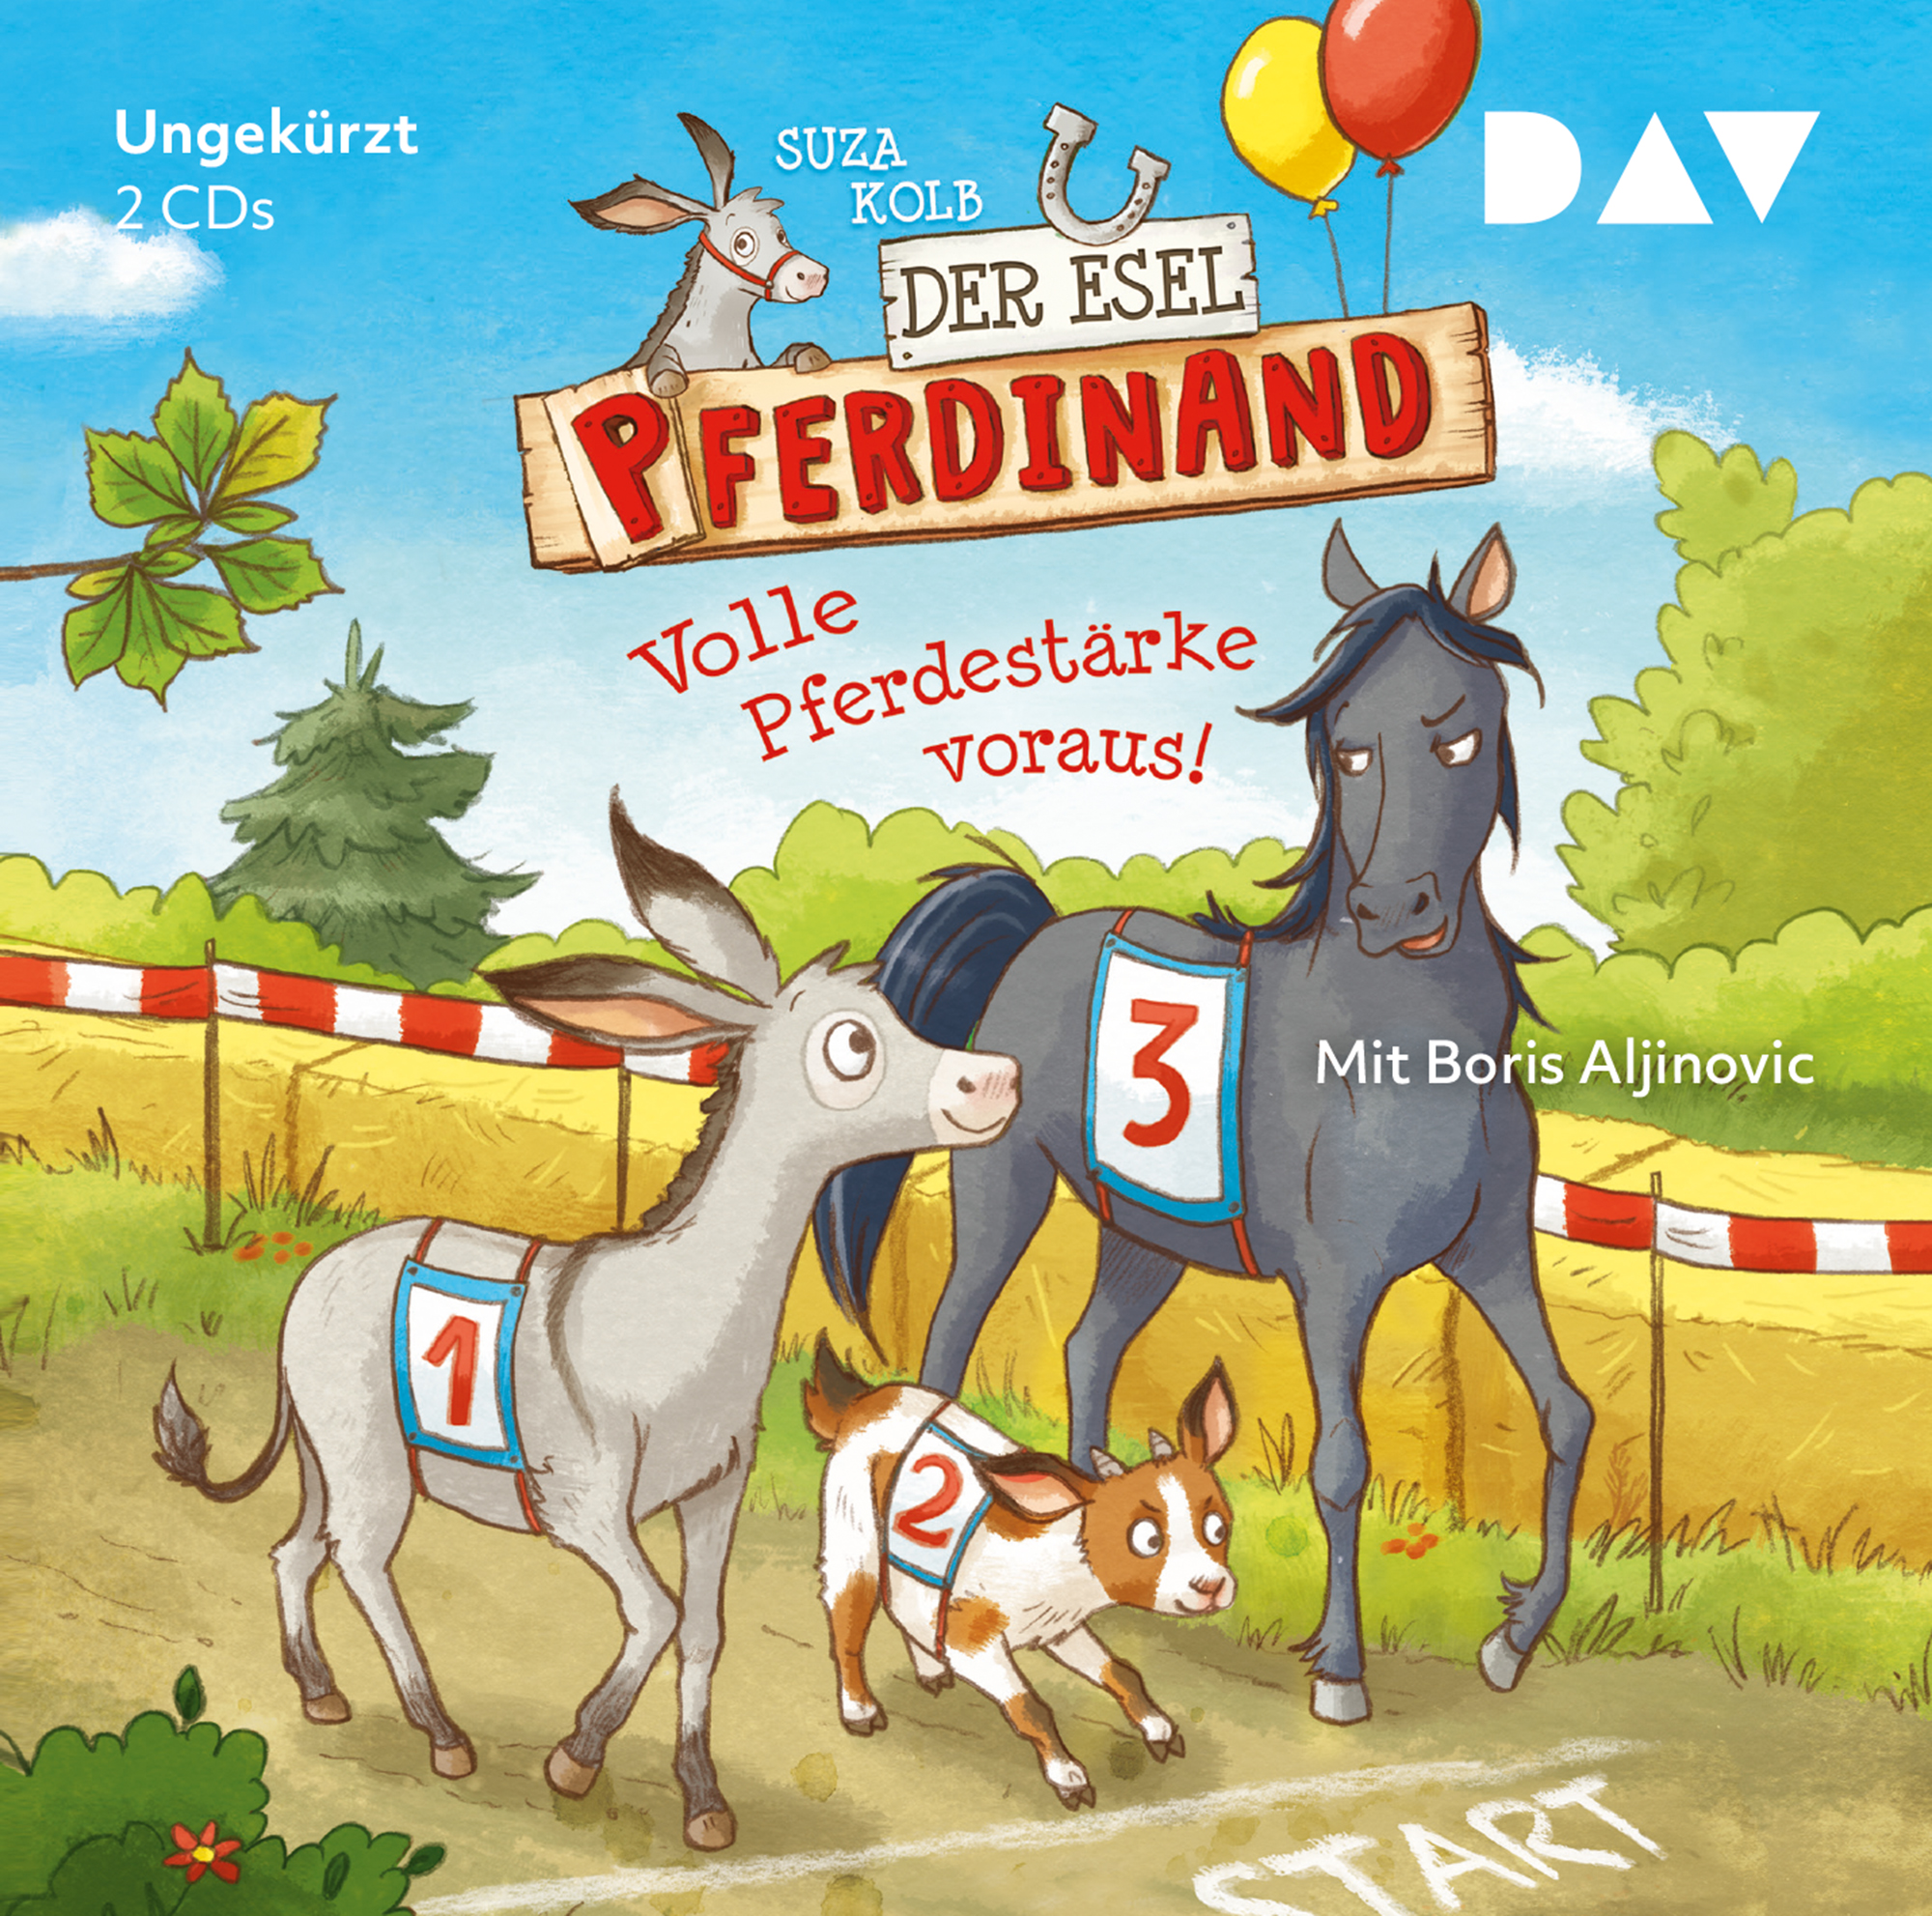 Kolb_Der Esel Ferdinand3_Covercard_Cover_v1.indd